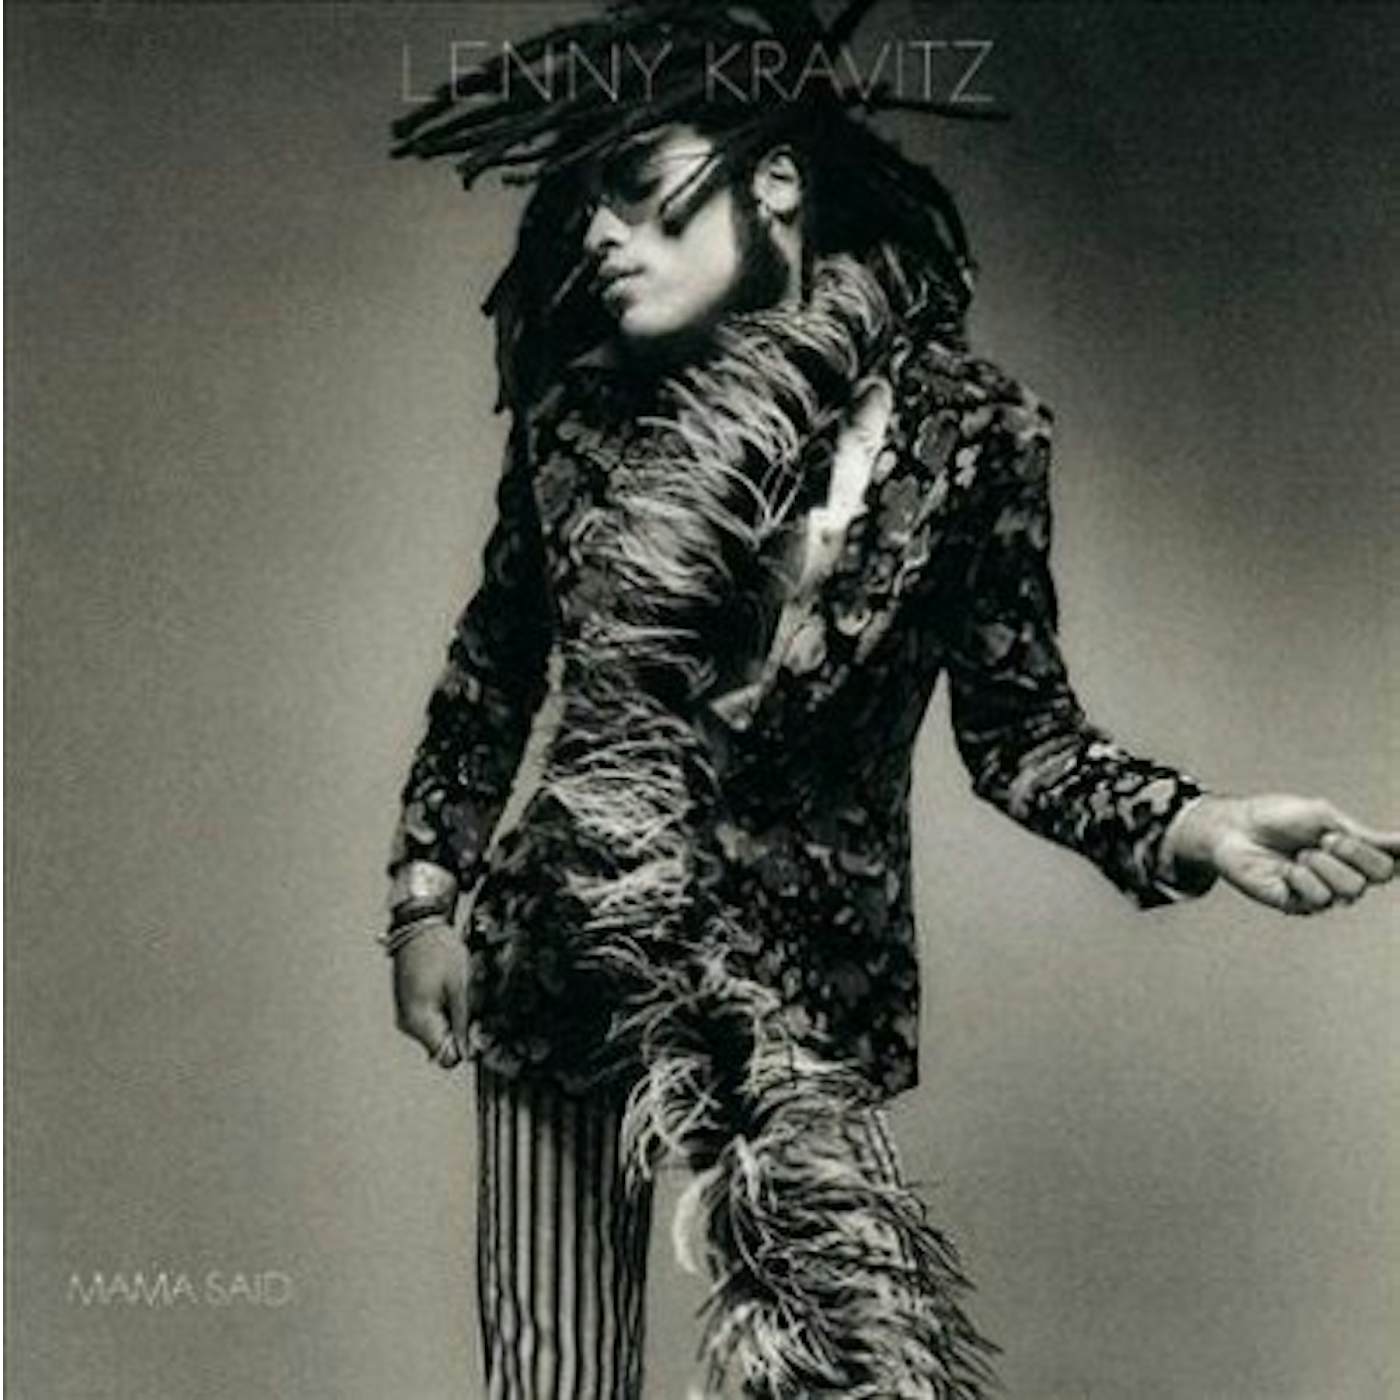 Lenny Kravitz MAMA SAID (2 LP) Vinyl Record